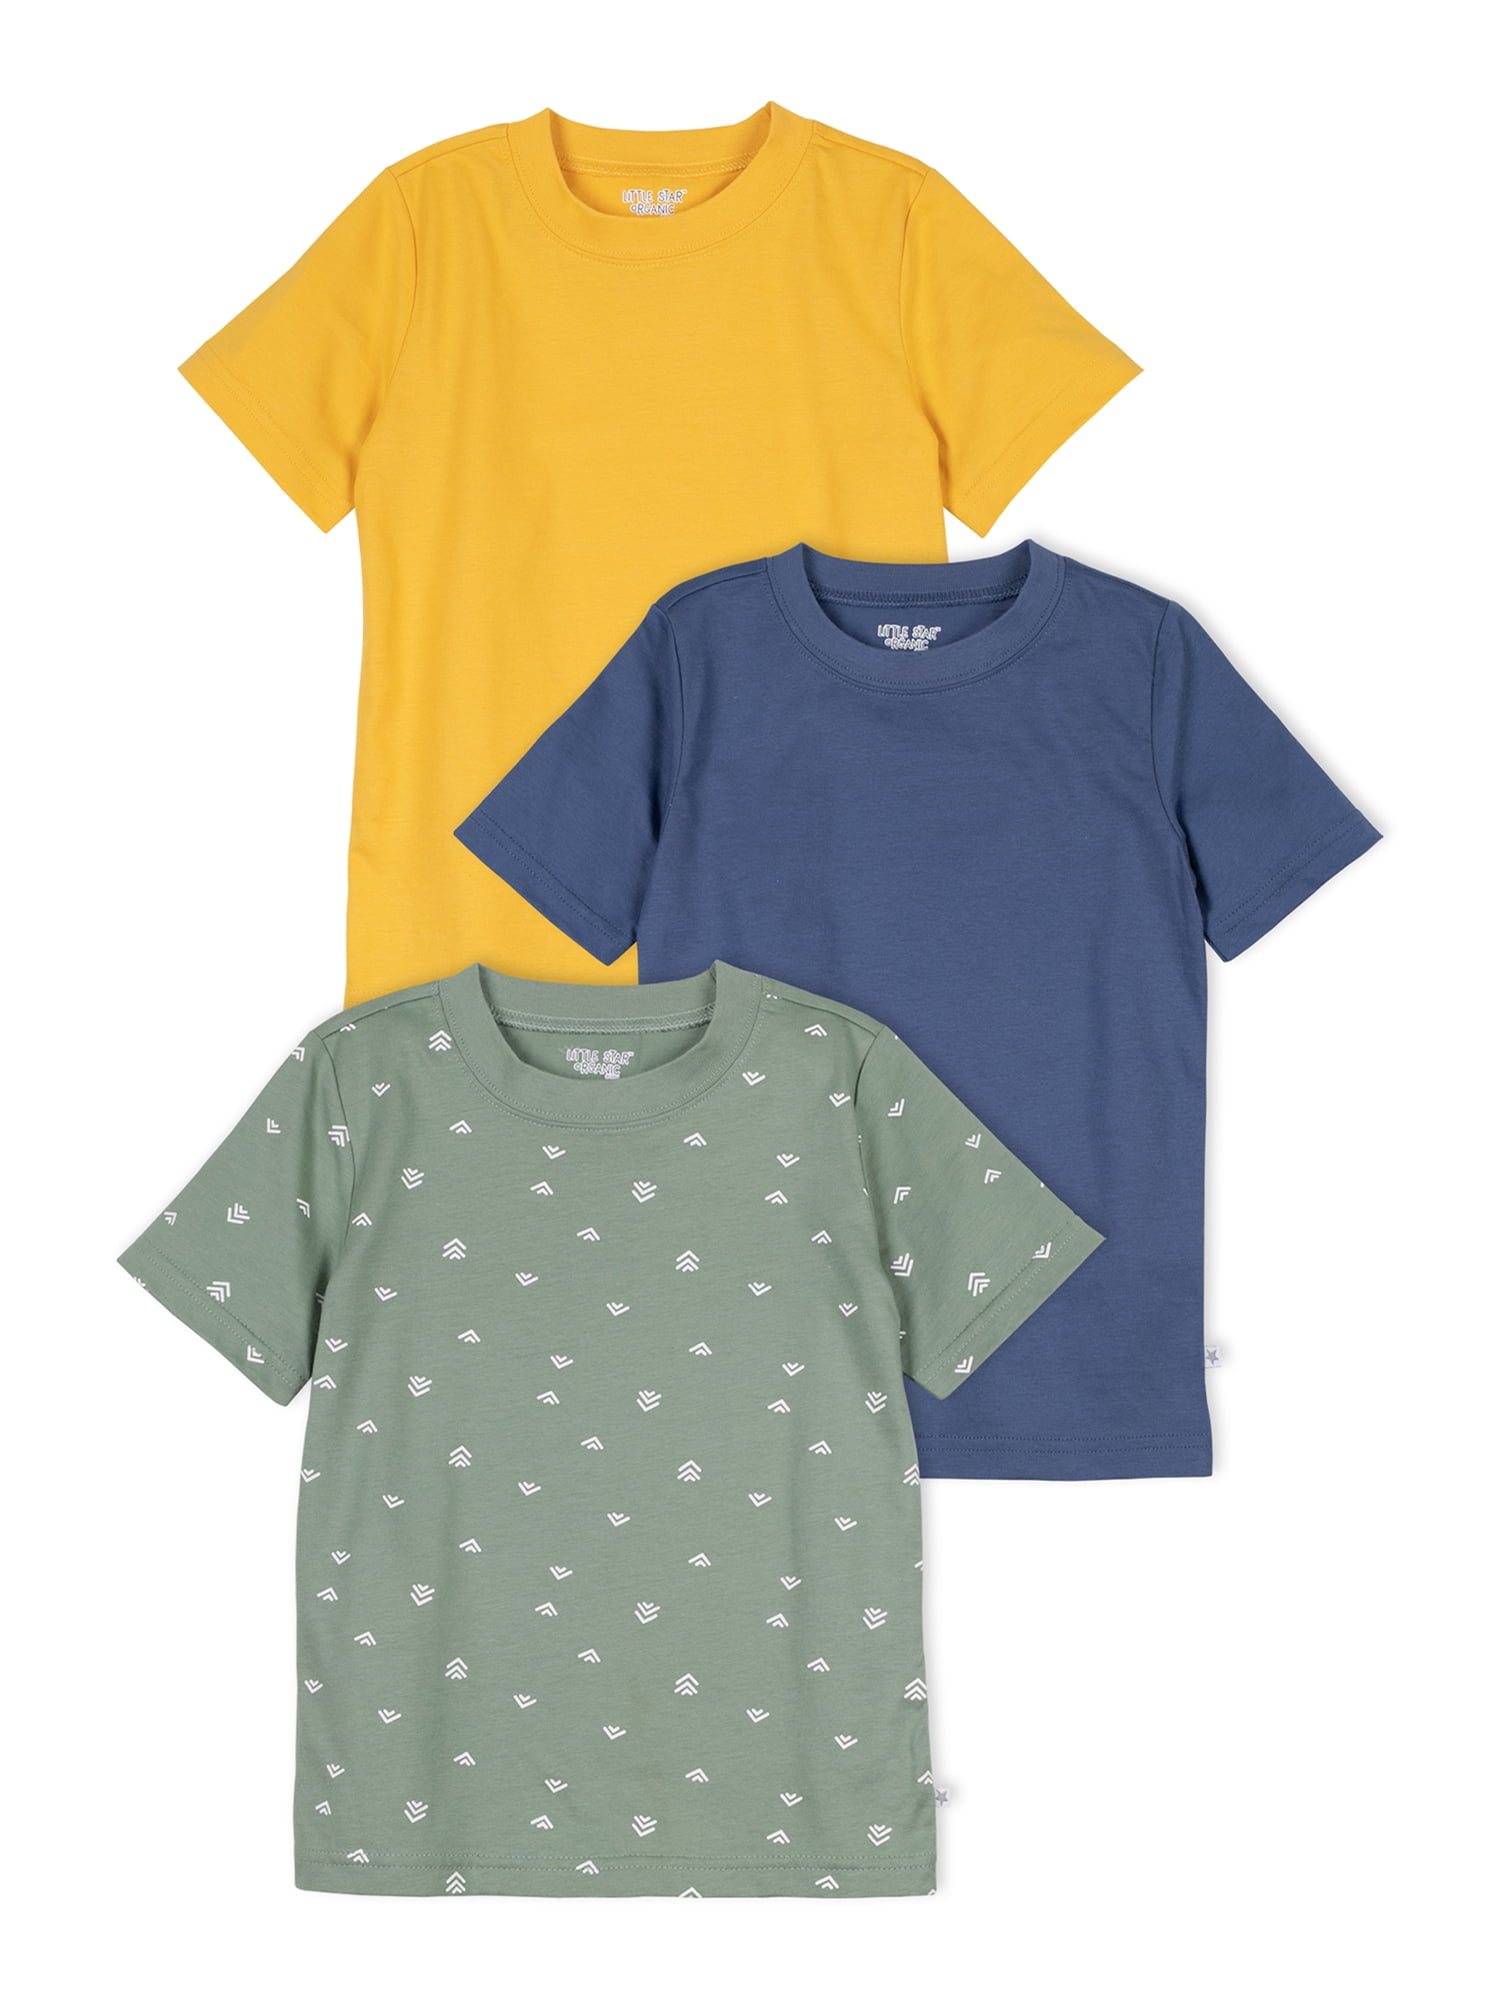 NEW Toddler Boys Football T Shirt Size 5T Sports Top Garanimals Graphic Tee Gray 